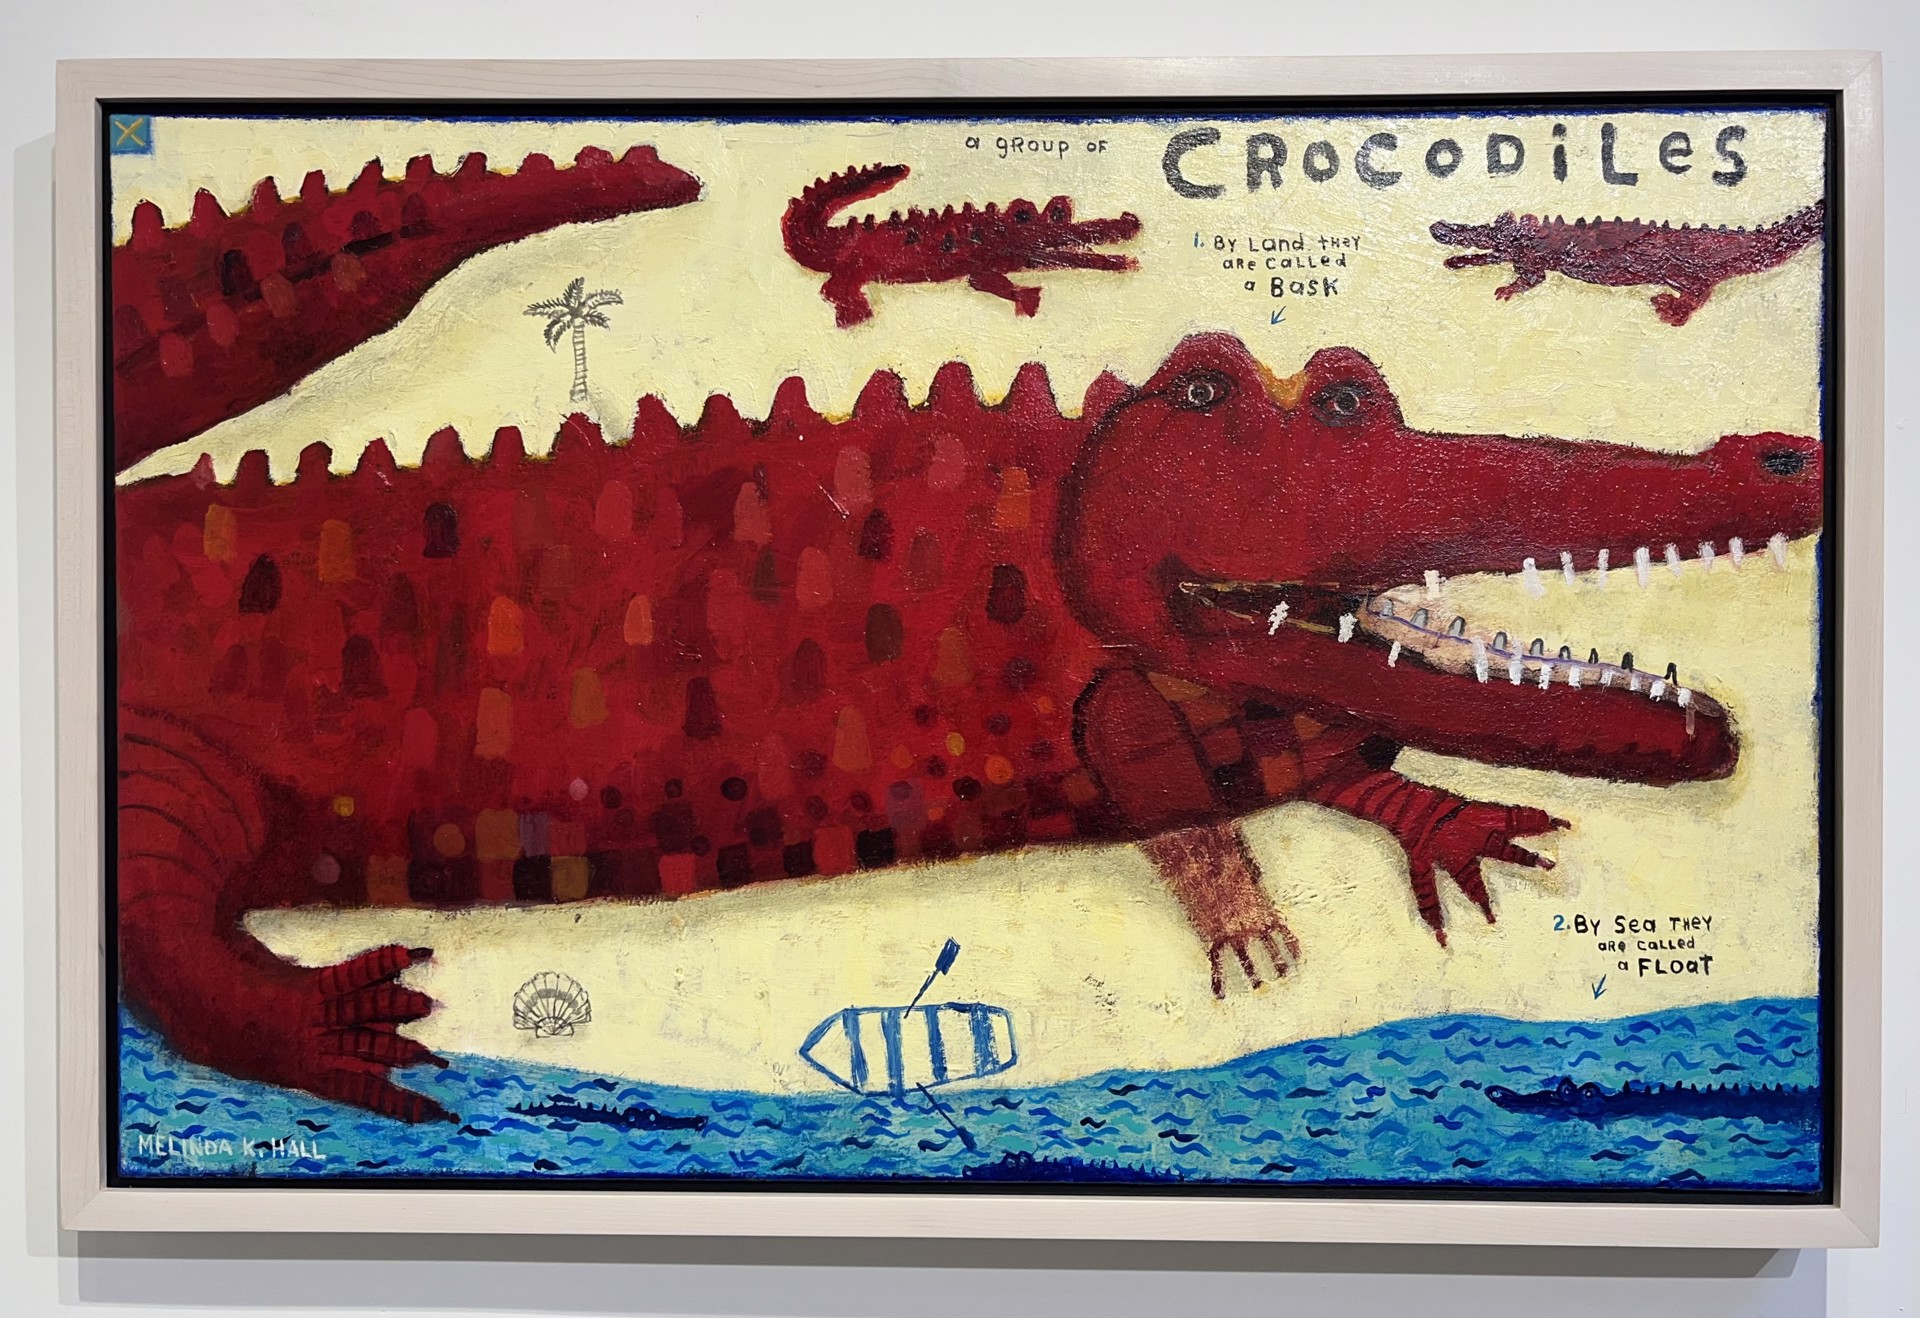 Crocodiles:   A Bask and a Float by Melinda K. Hall